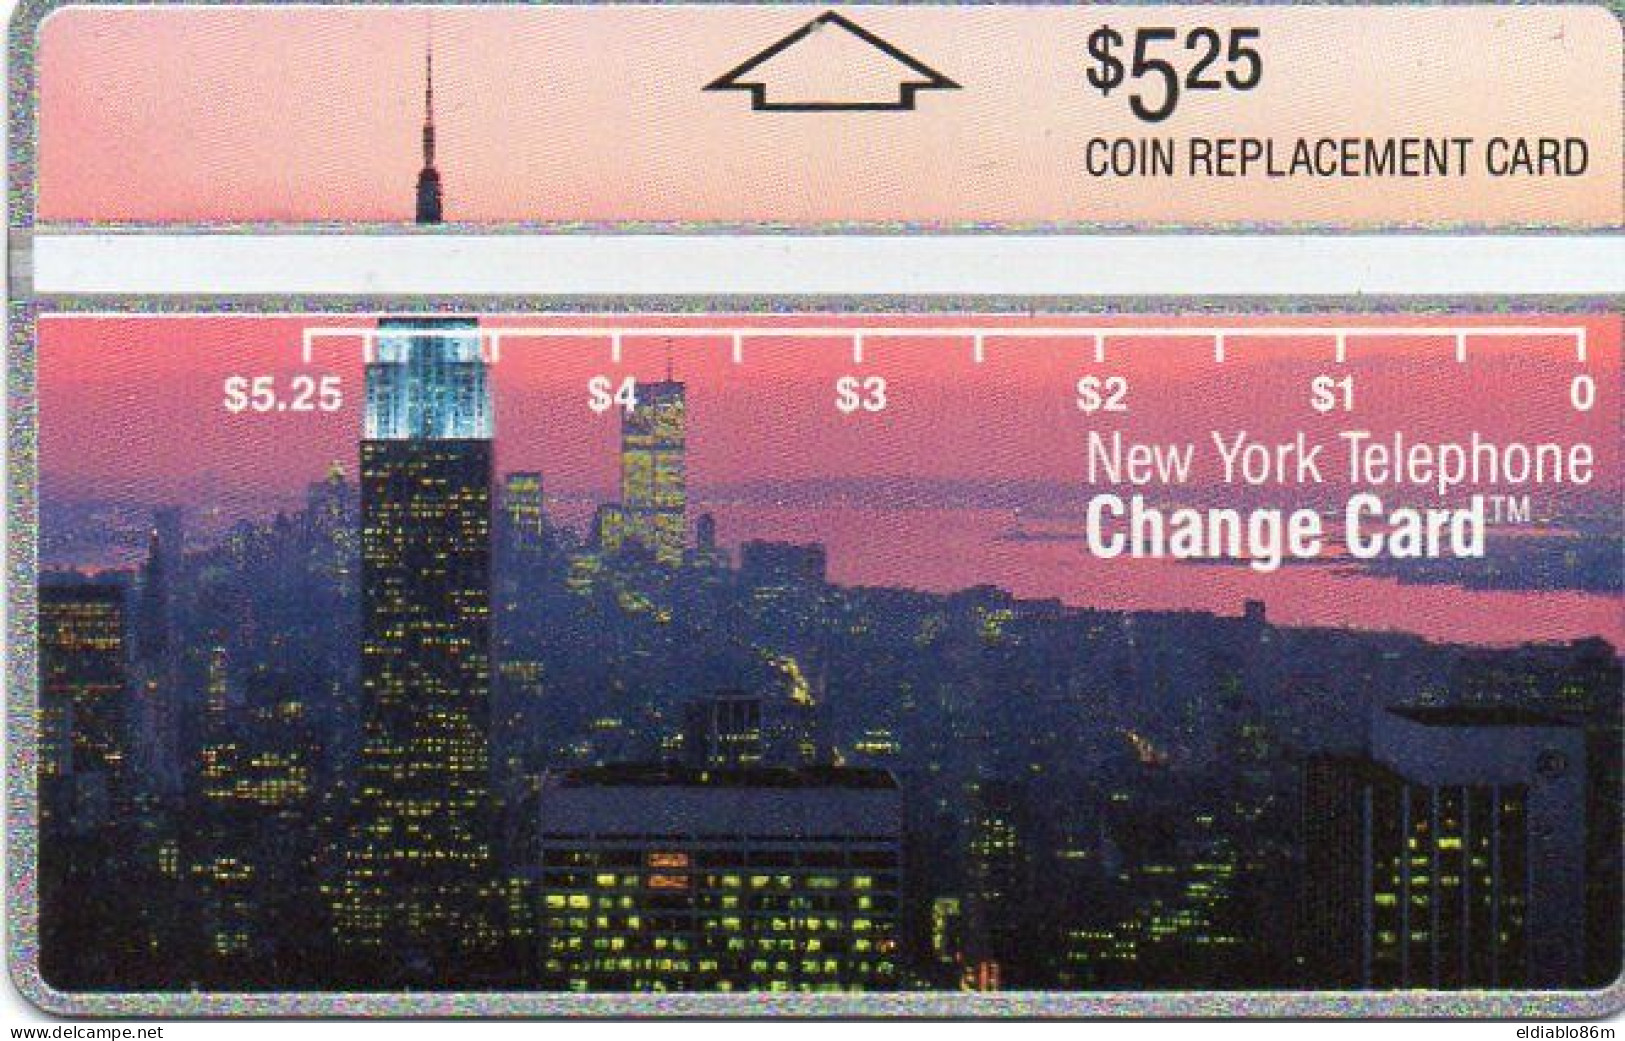 UNITED STATES - L&G - NYNEX - NEW YORK SKYLINE - 210B - MINT - Cartes Holographiques (Landis & Gyr)